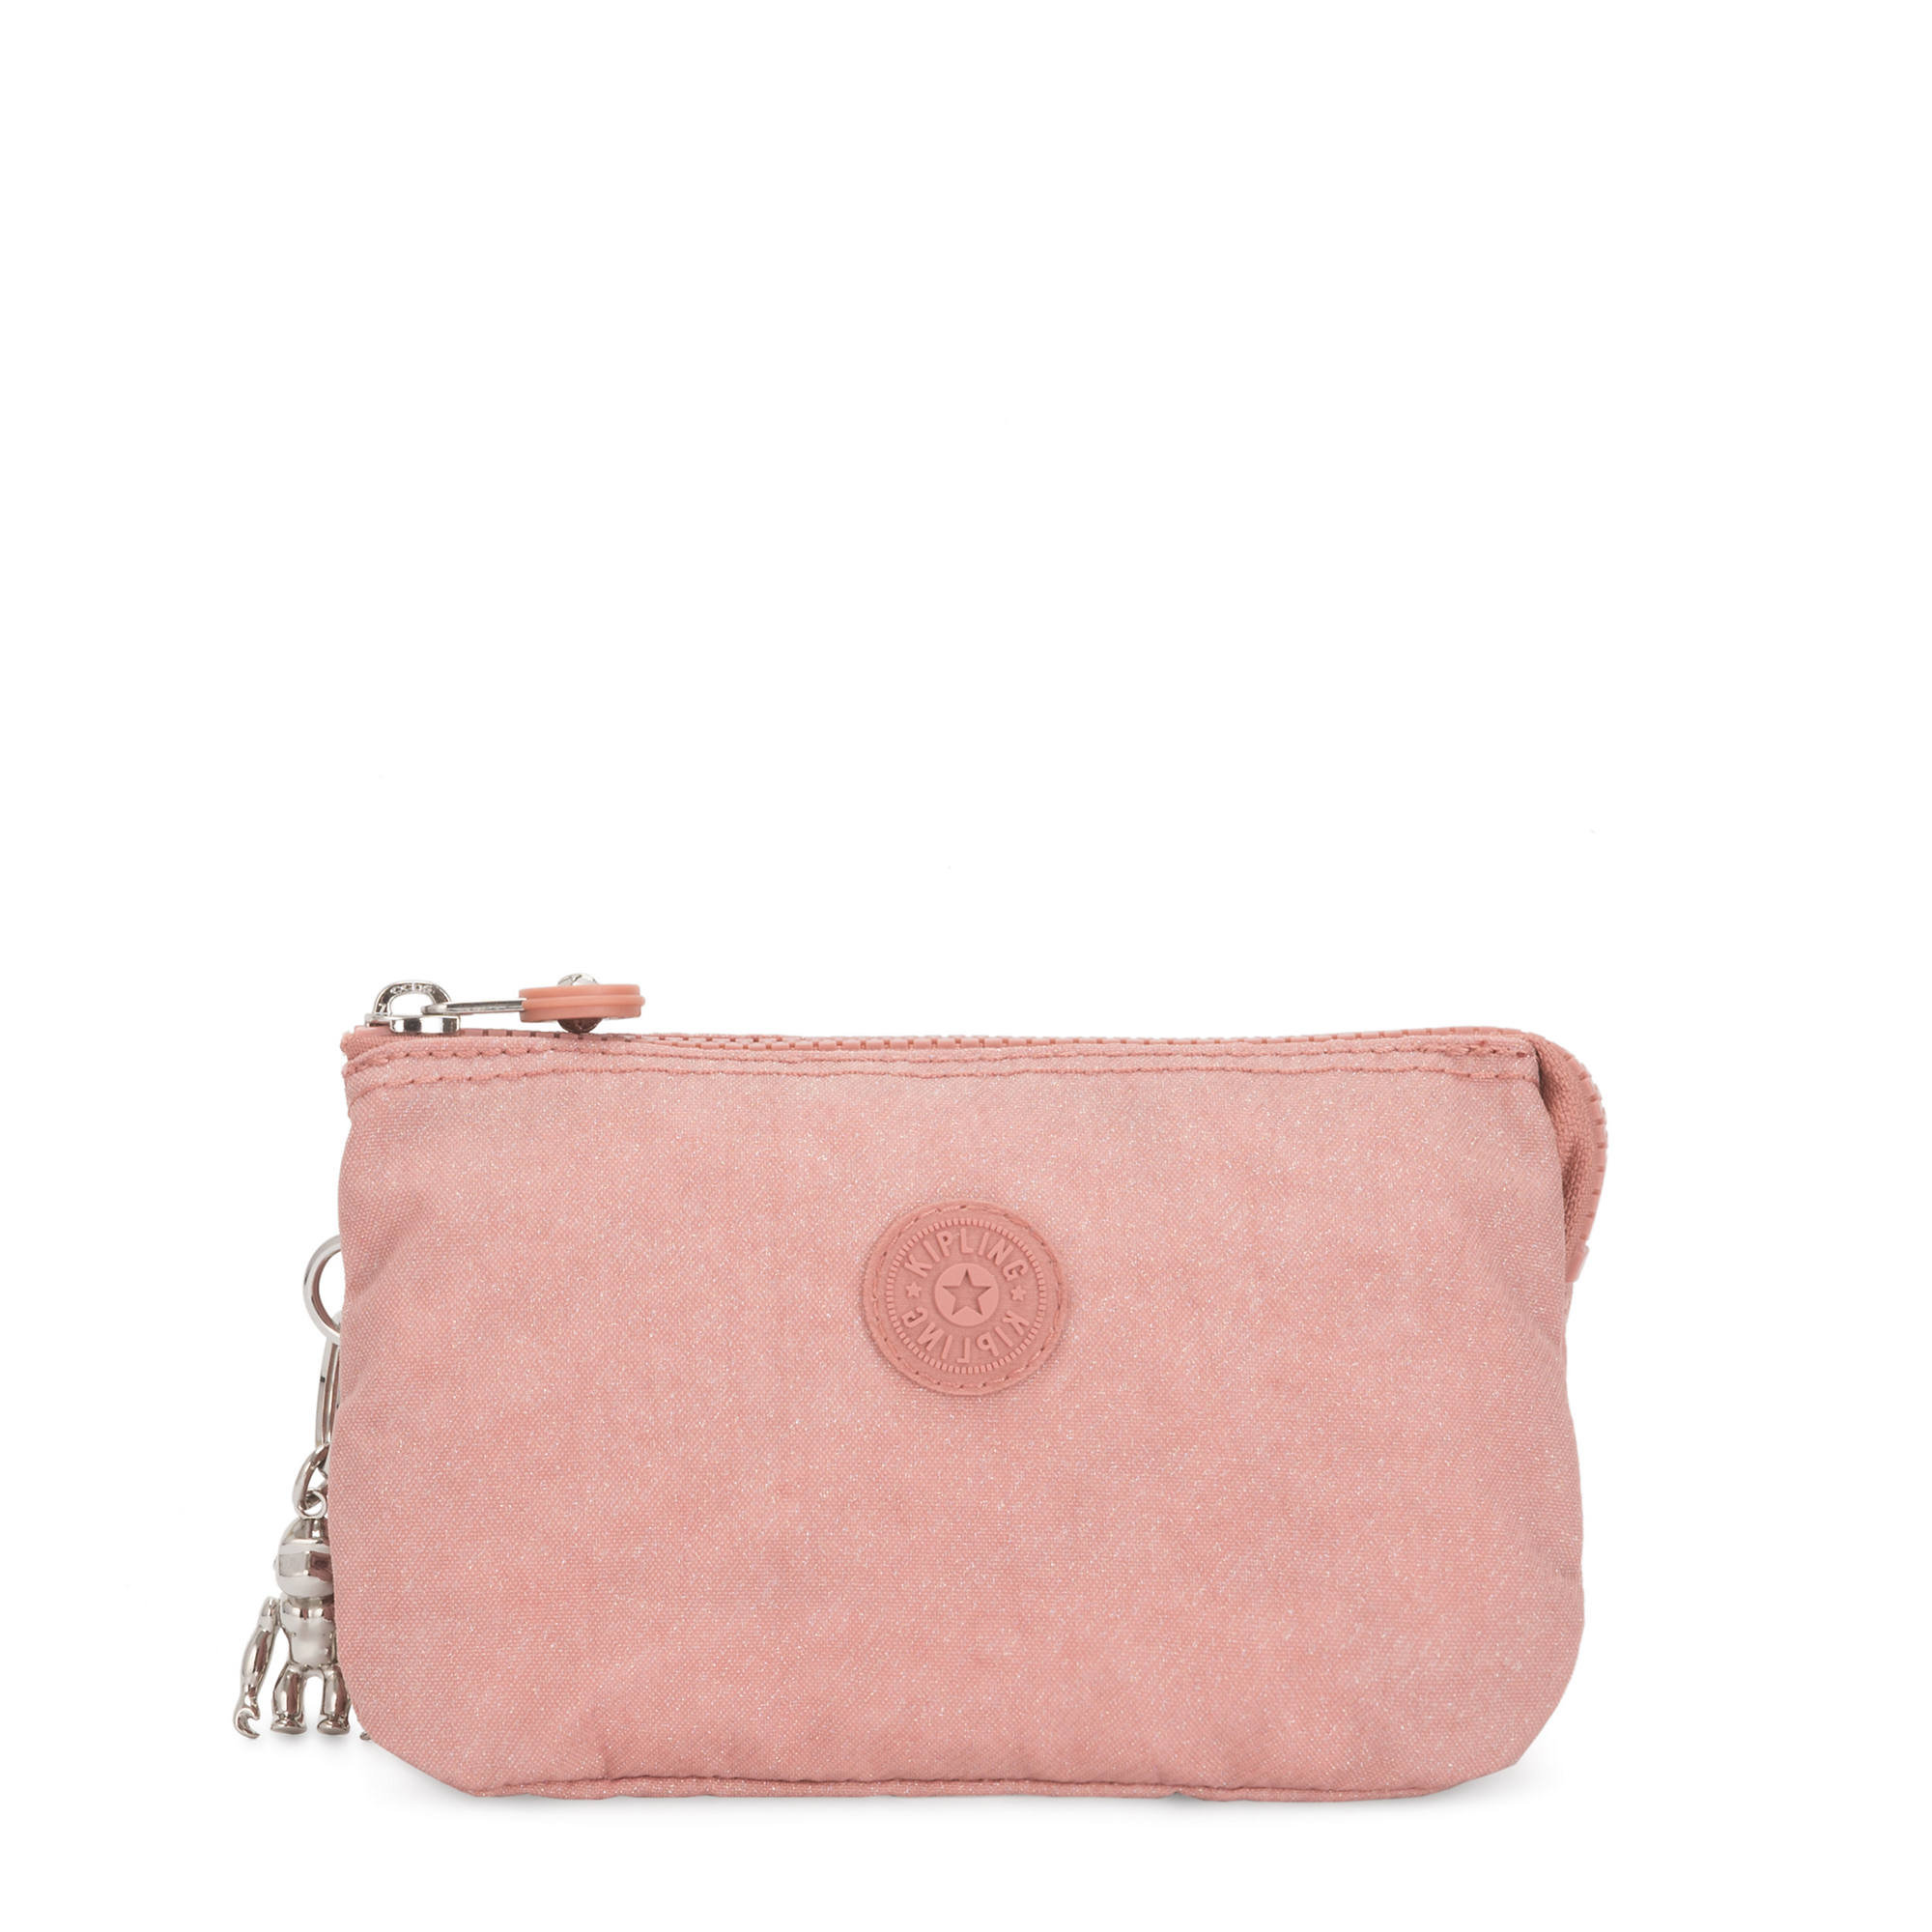 Kipling Creativity Large Pouch G Twist Pink for sale online | eBay